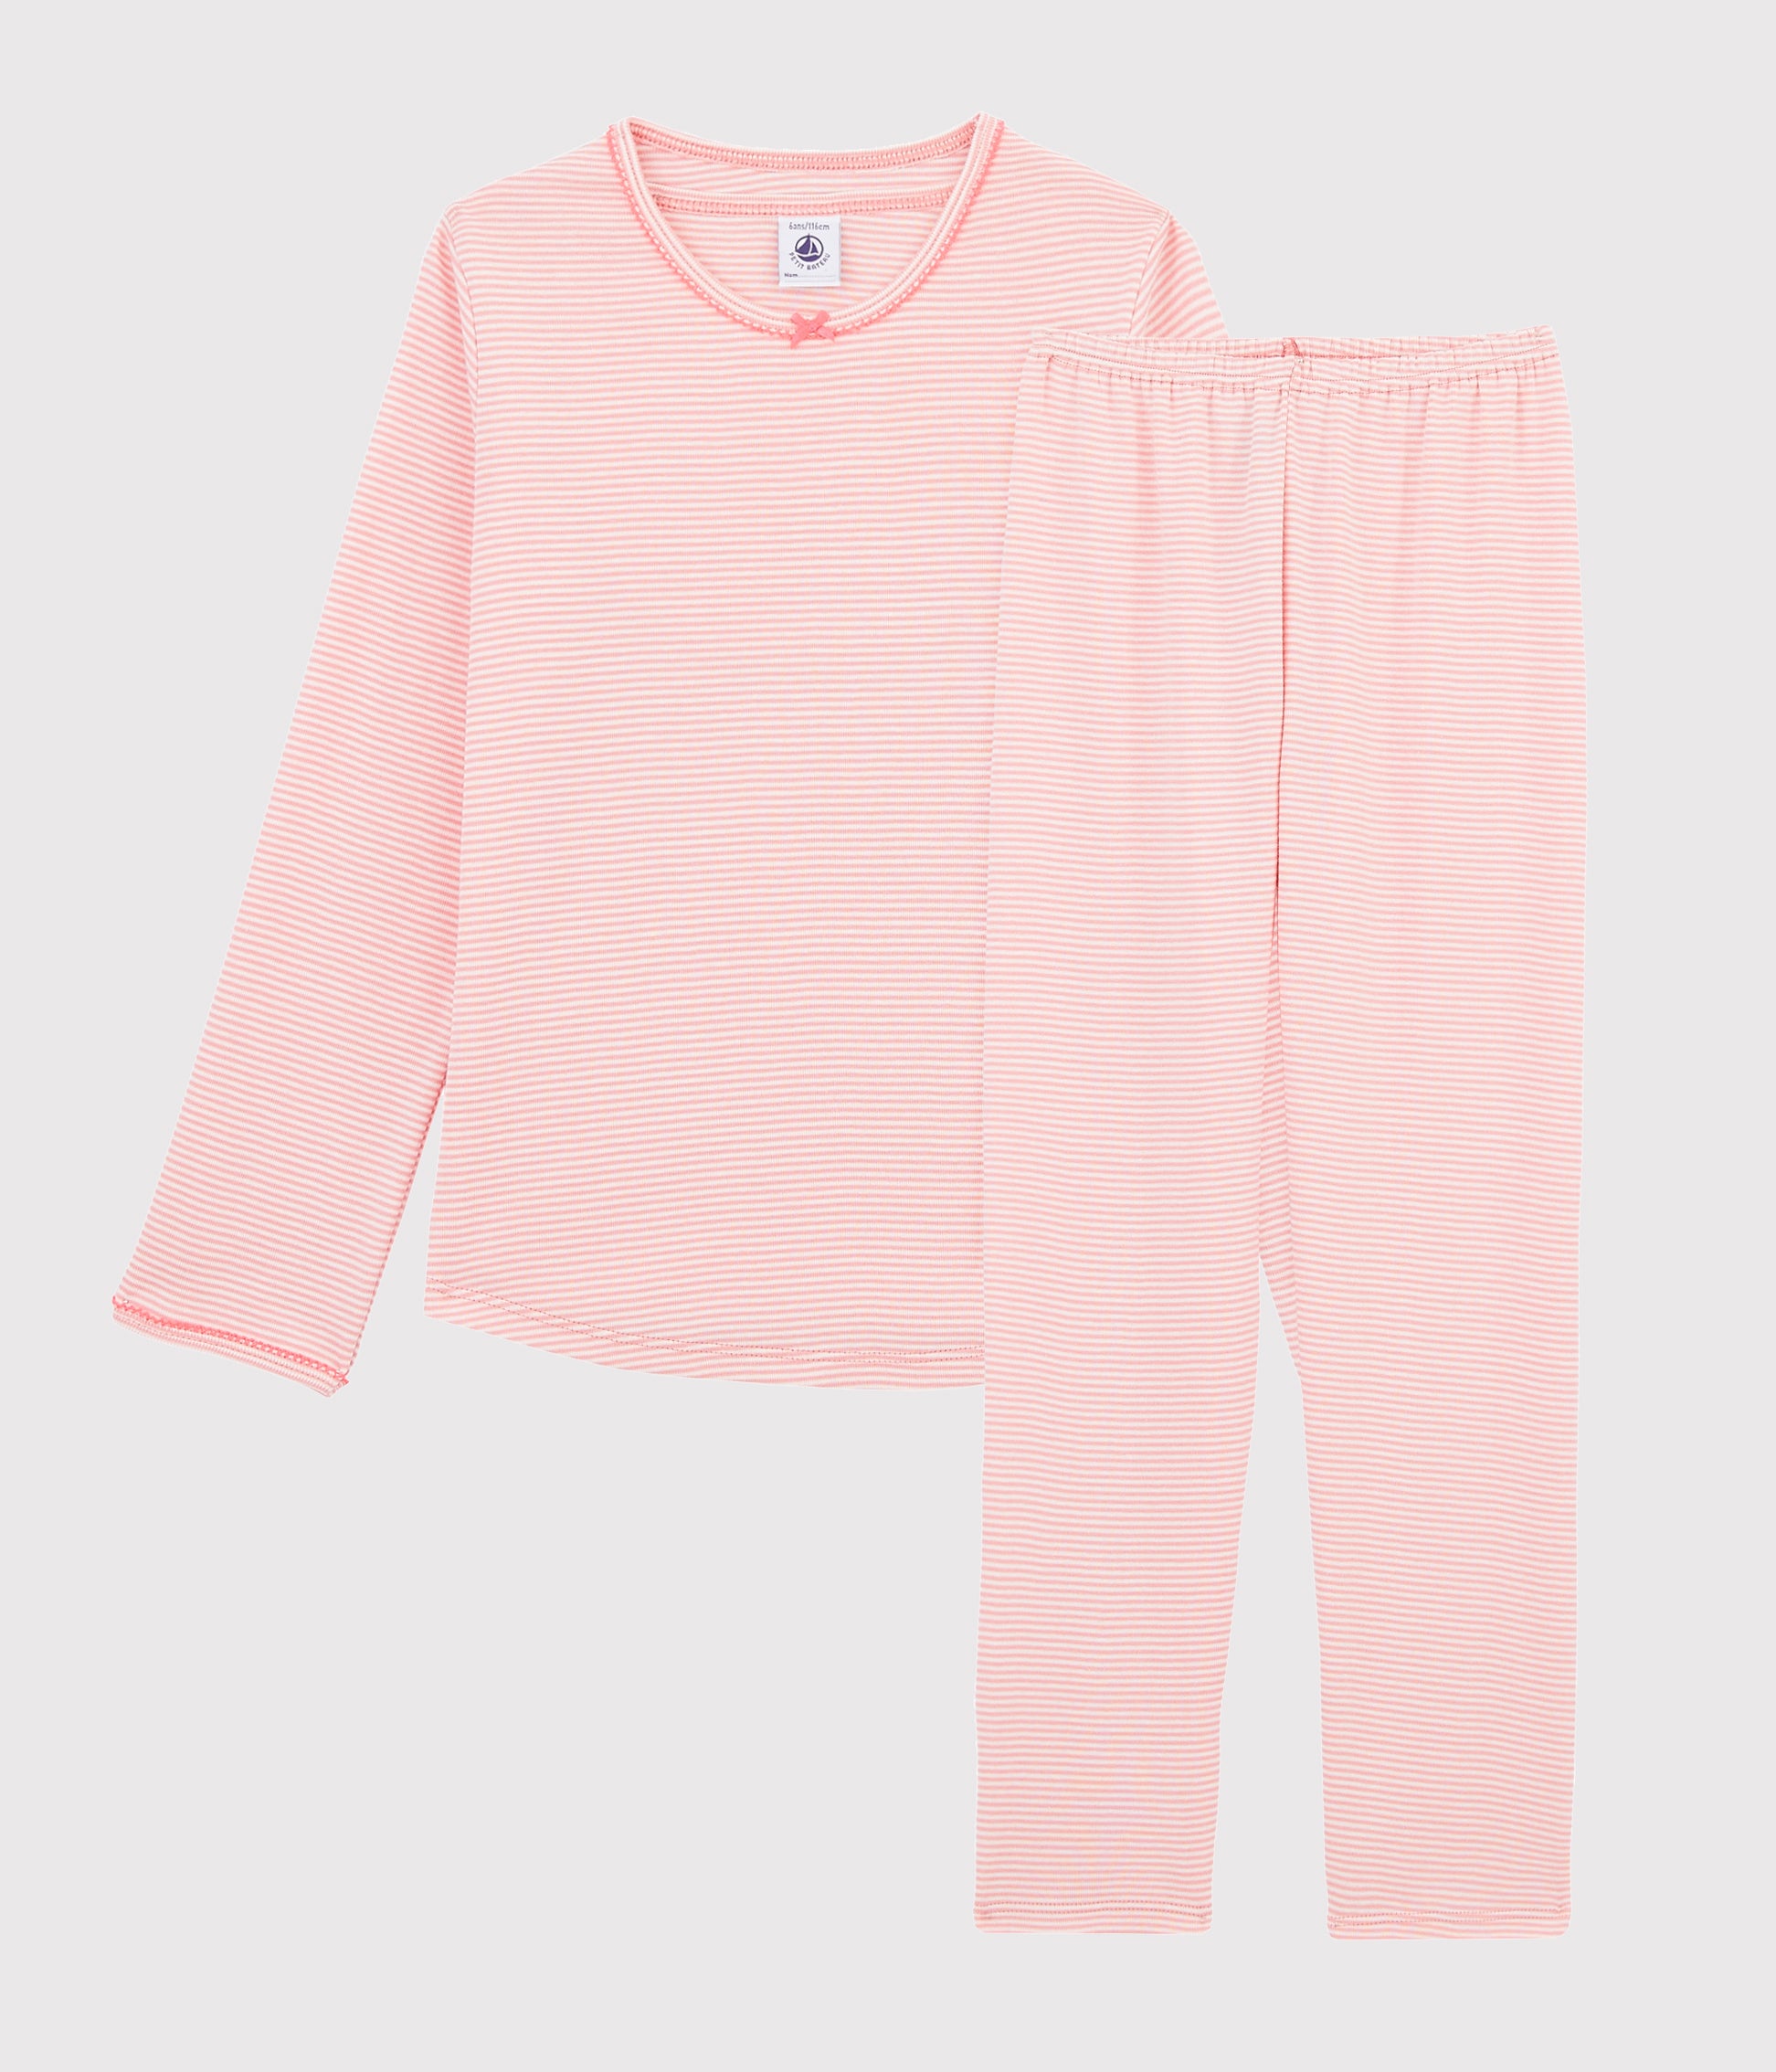 Girls Pink Stripe Cotton Nightwear Set